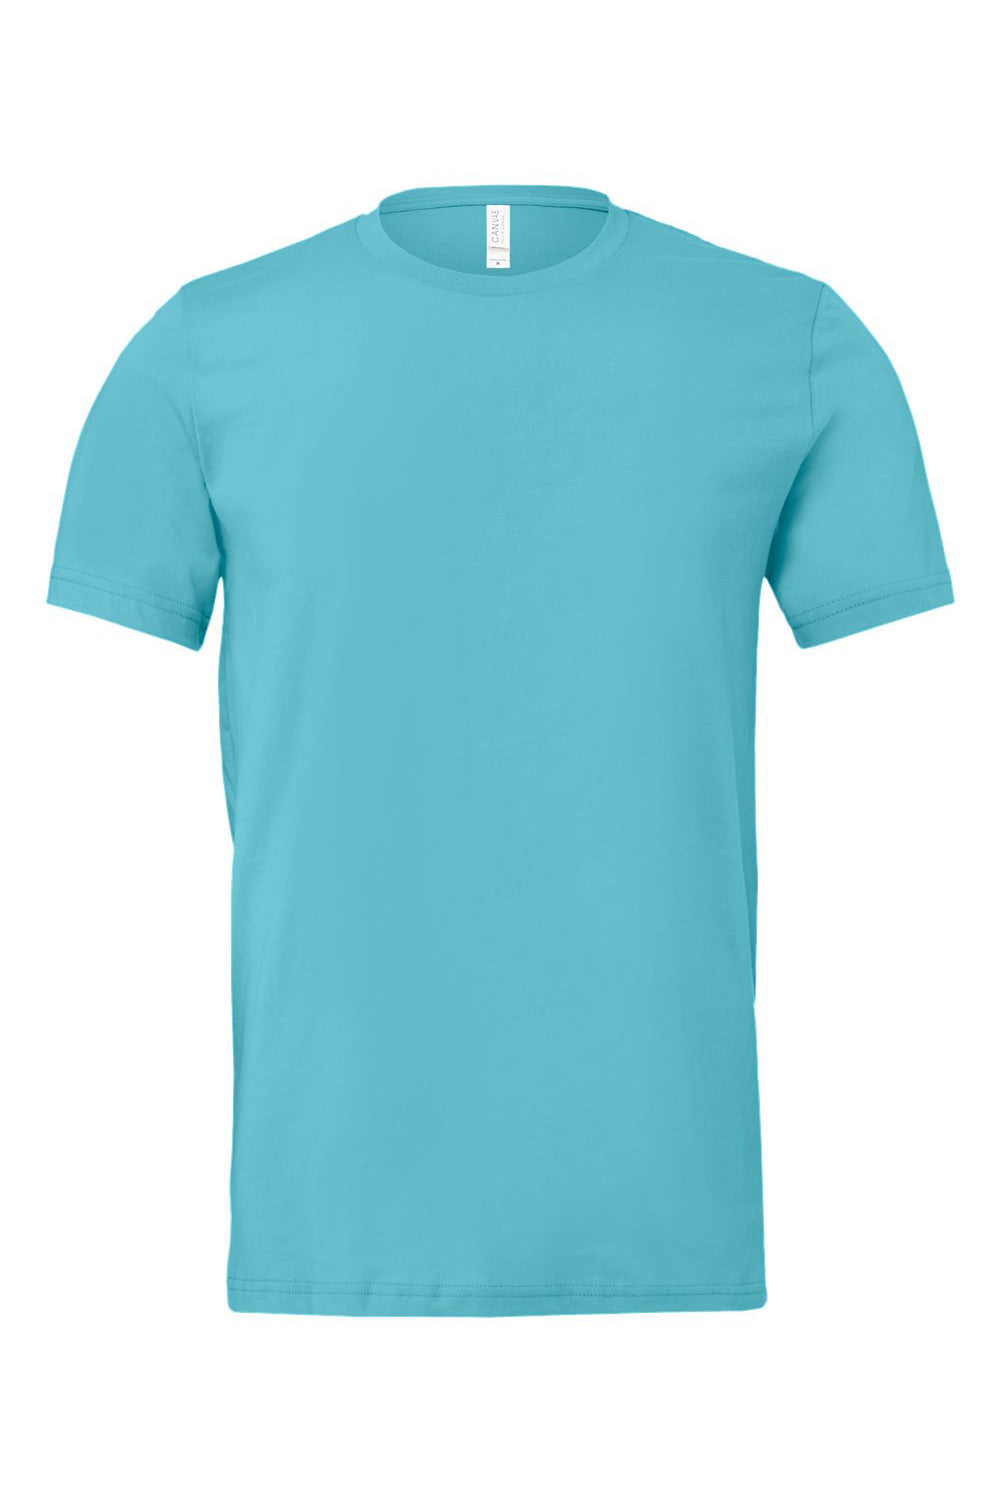 Bella + Canvas BC3001/3001C Mens Jersey Short Sleeve Crewneck T-Shirt Turquoise Blue Flat Front